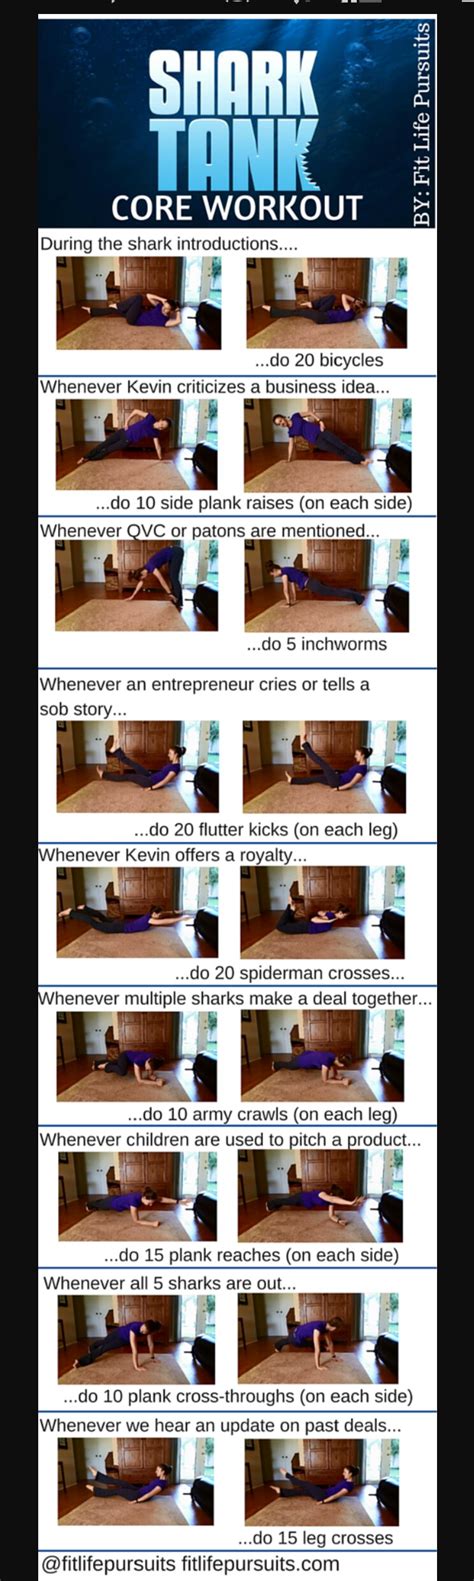 Netflix Workout Tv Show Workouts Workout Games Workout Fits Upper Body Workout Core Workout